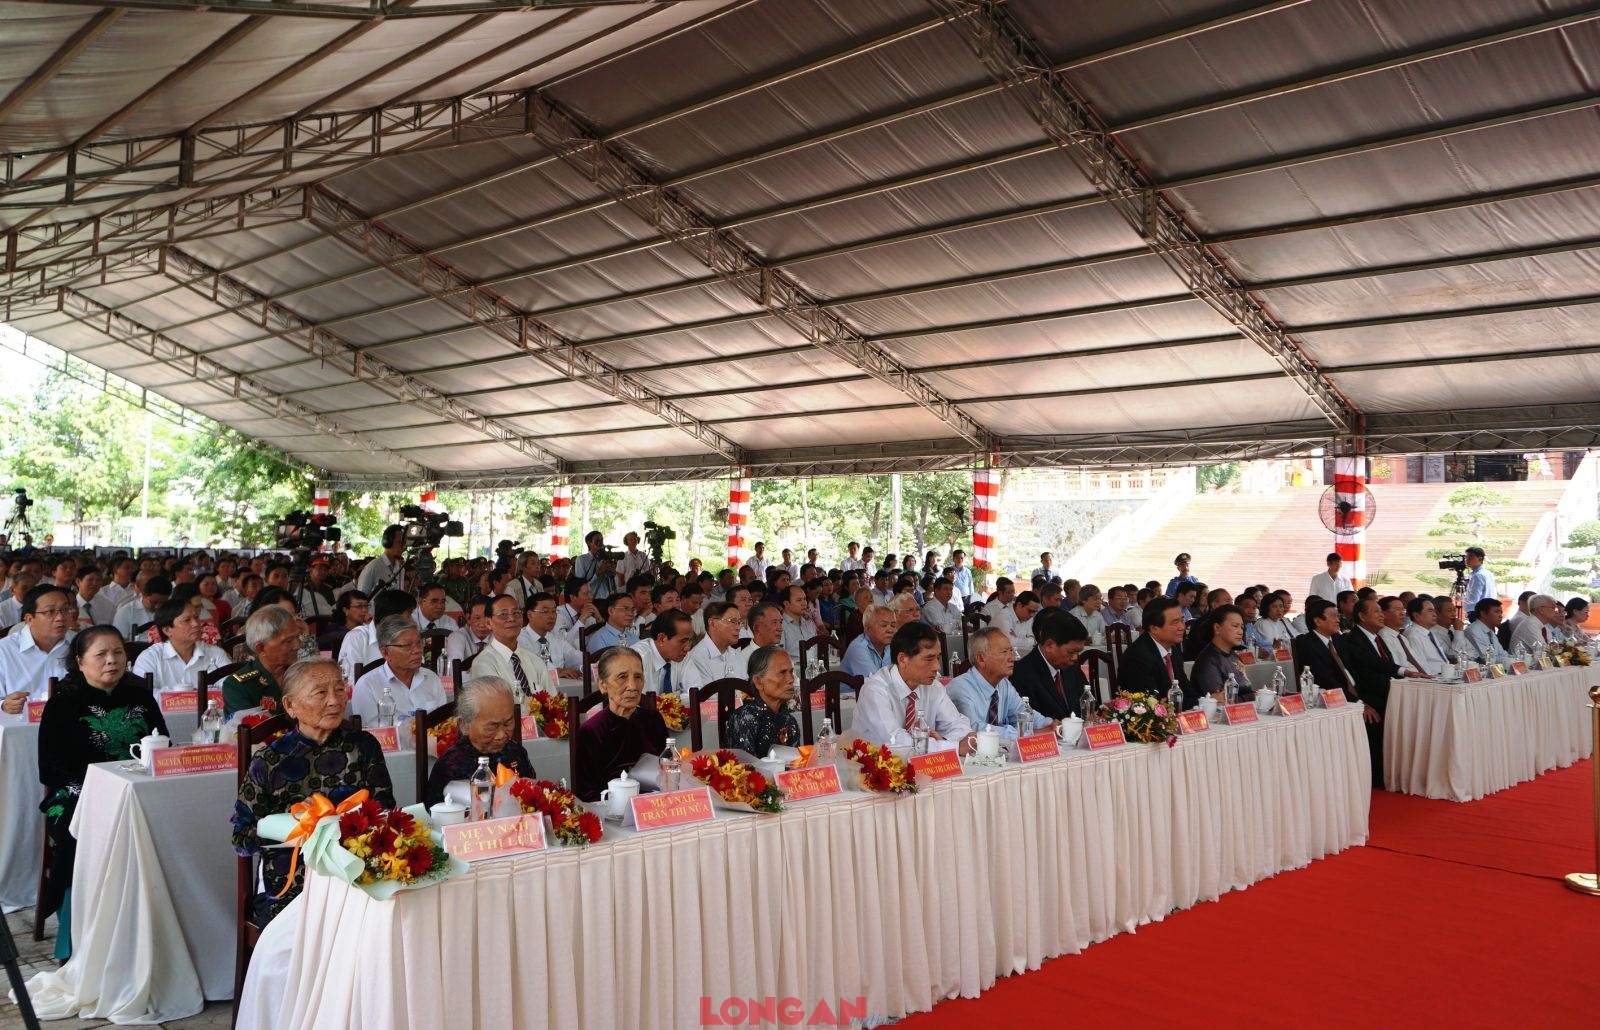 Delegates attend the ceremony